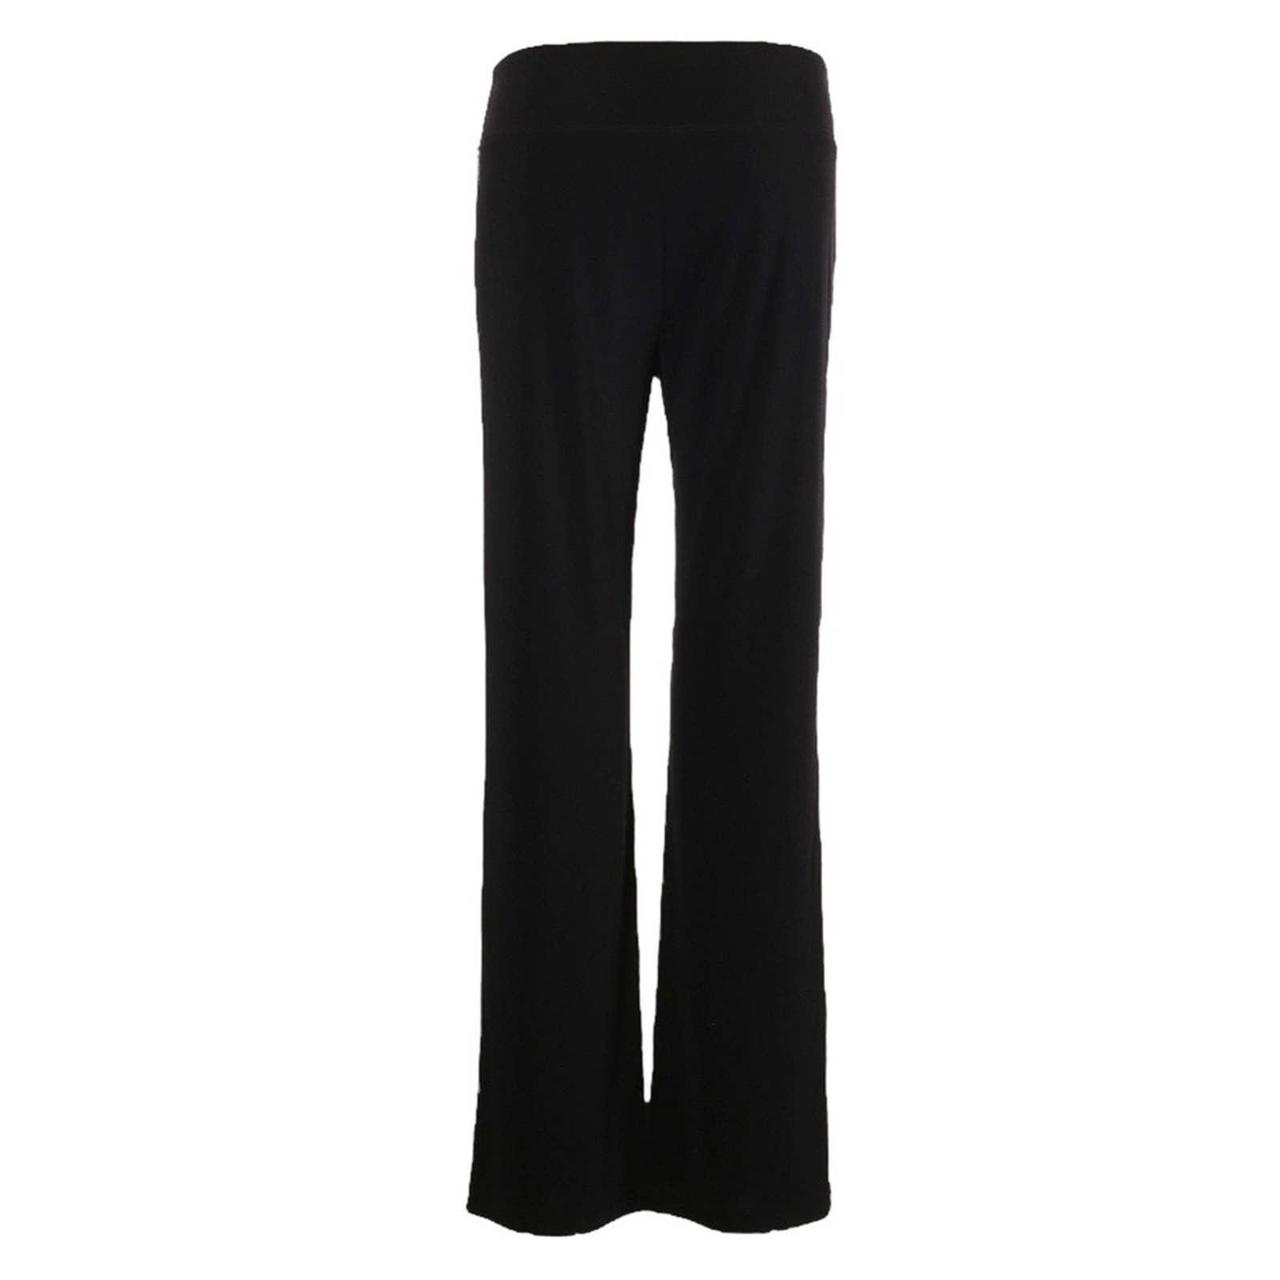 Coldwater Creek Black Knit Pants, Black, Size... - Depop